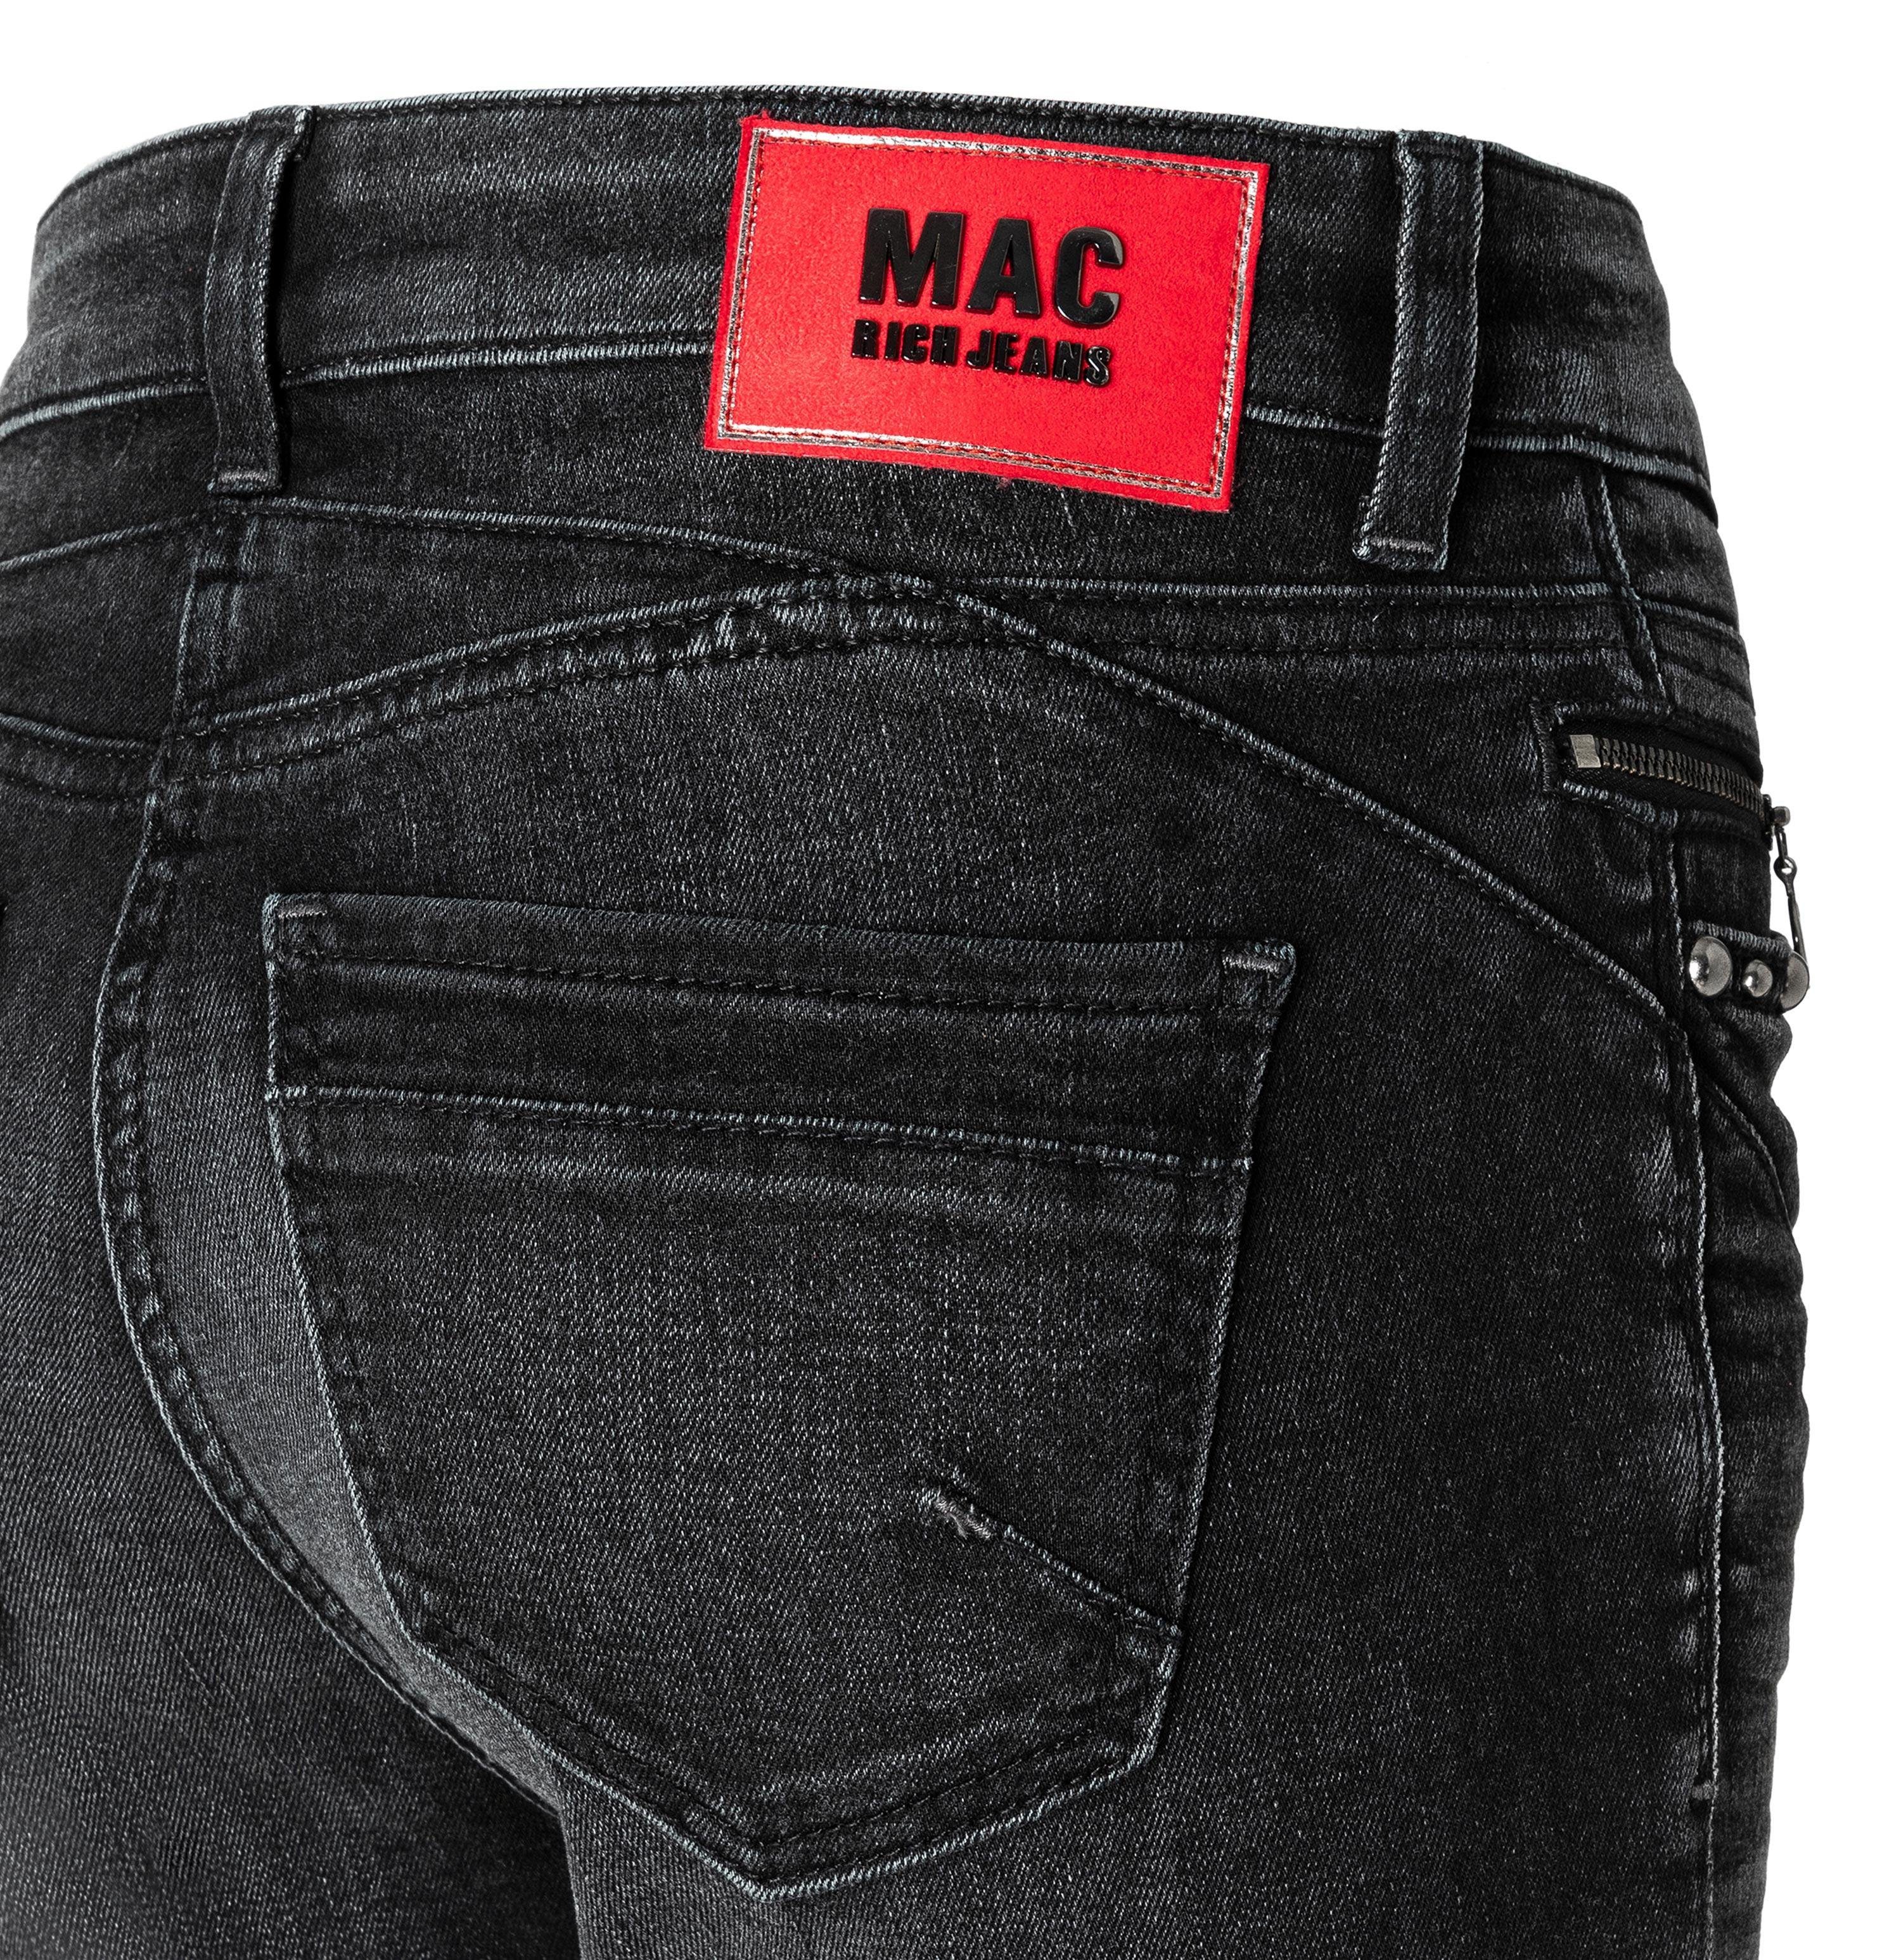 RICH Stretch-Jeans D976 SLIM wash MAC night dark MAC 5749-91-0389